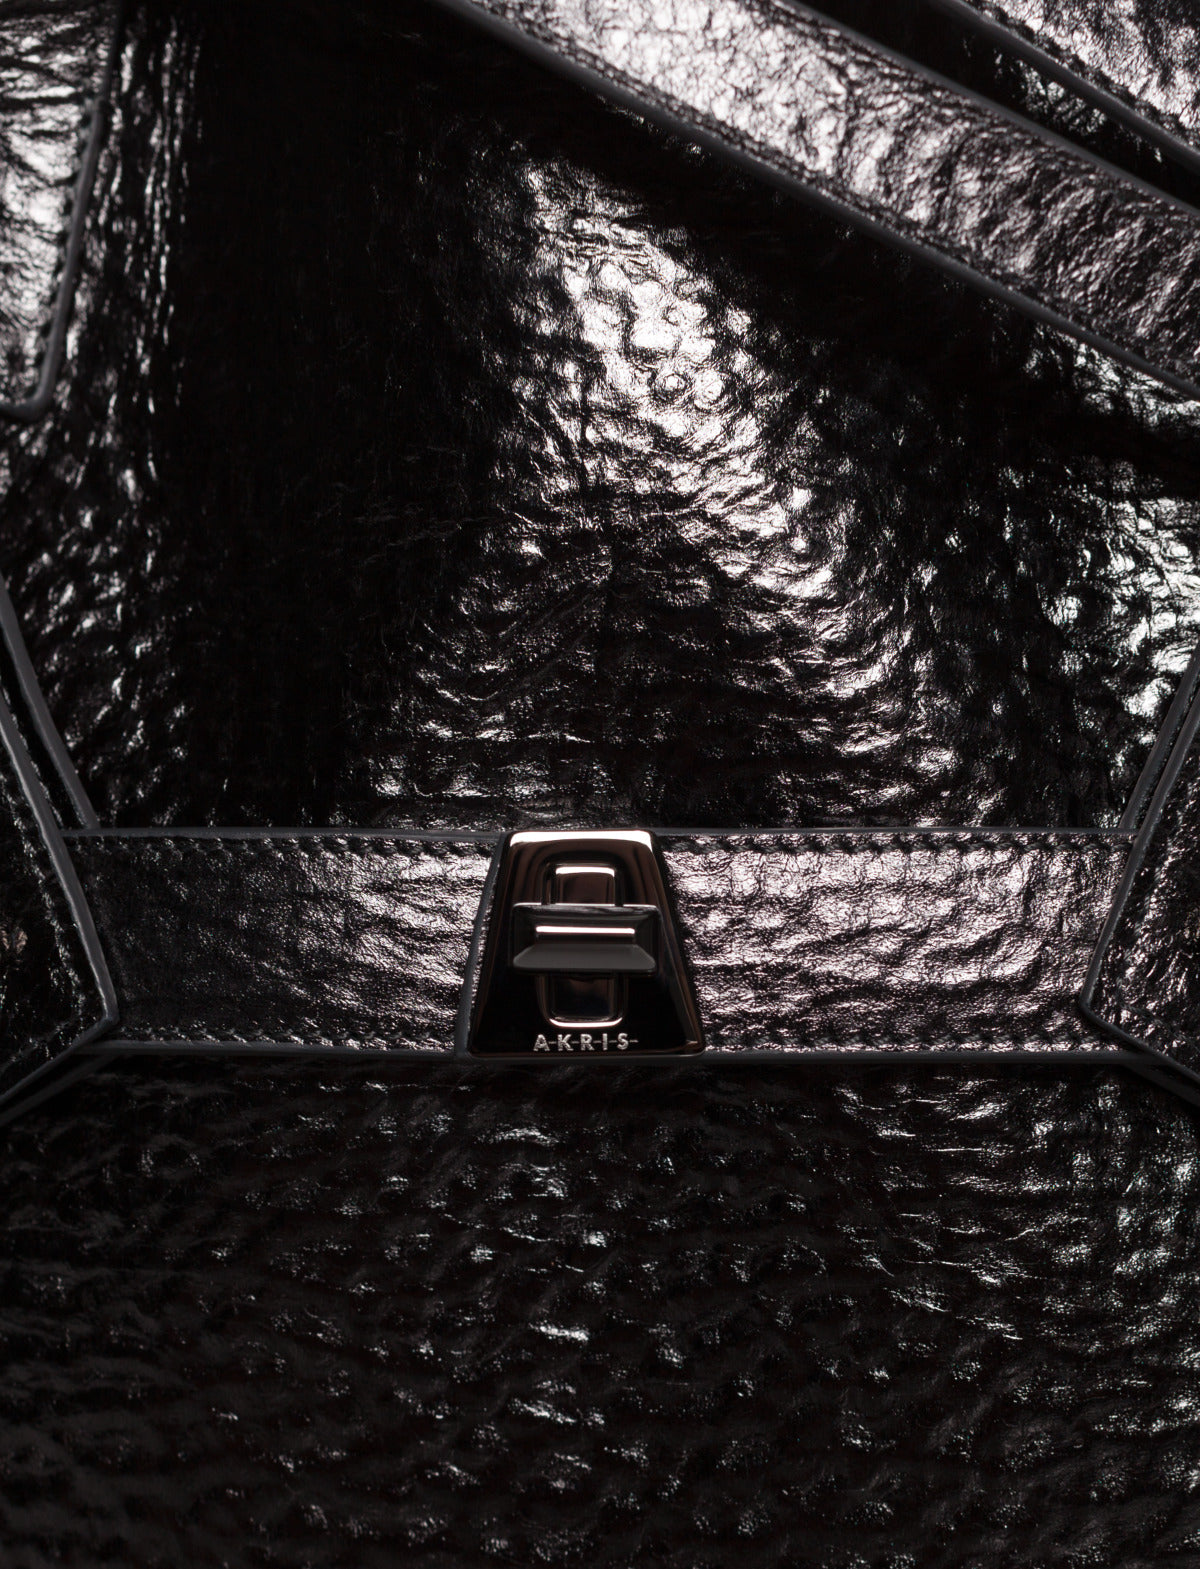 Pure: The Timeless Black Handbag